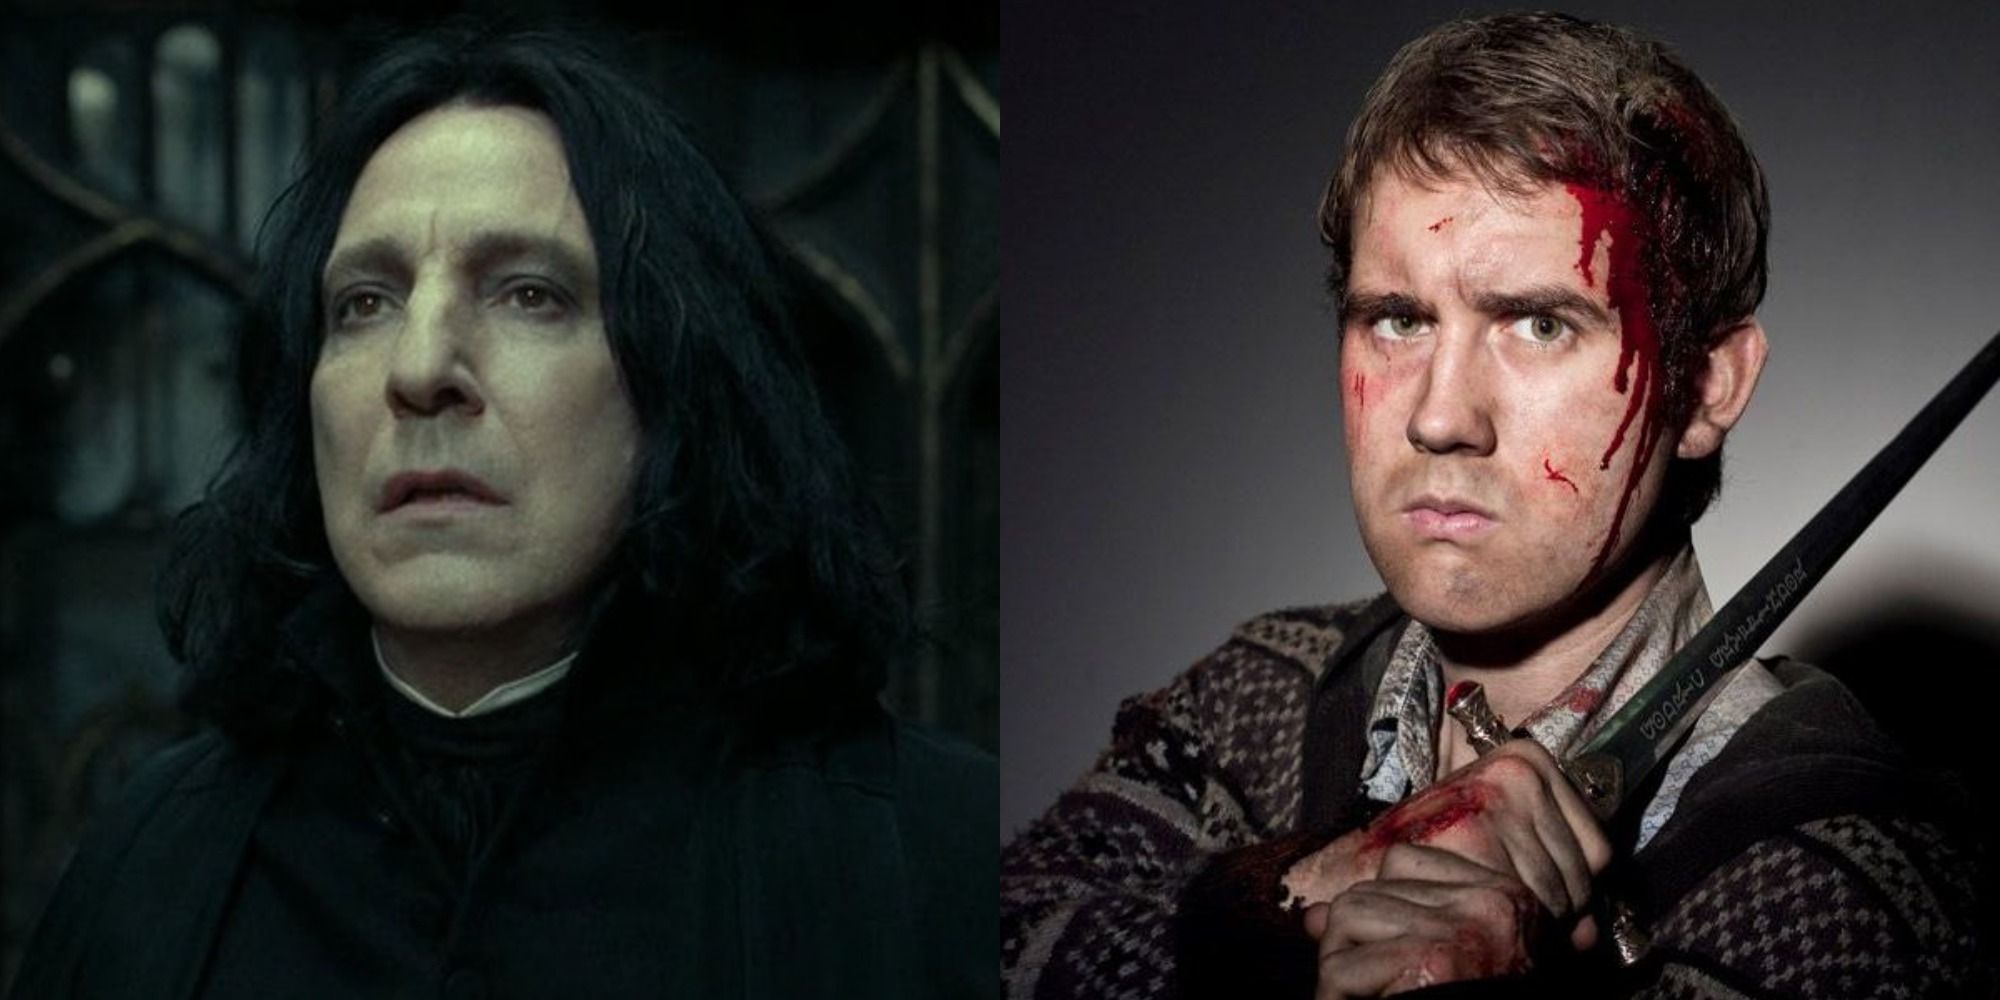 Split image showing Severus Snape and Neville Longbottom in the Harry Potter franchise